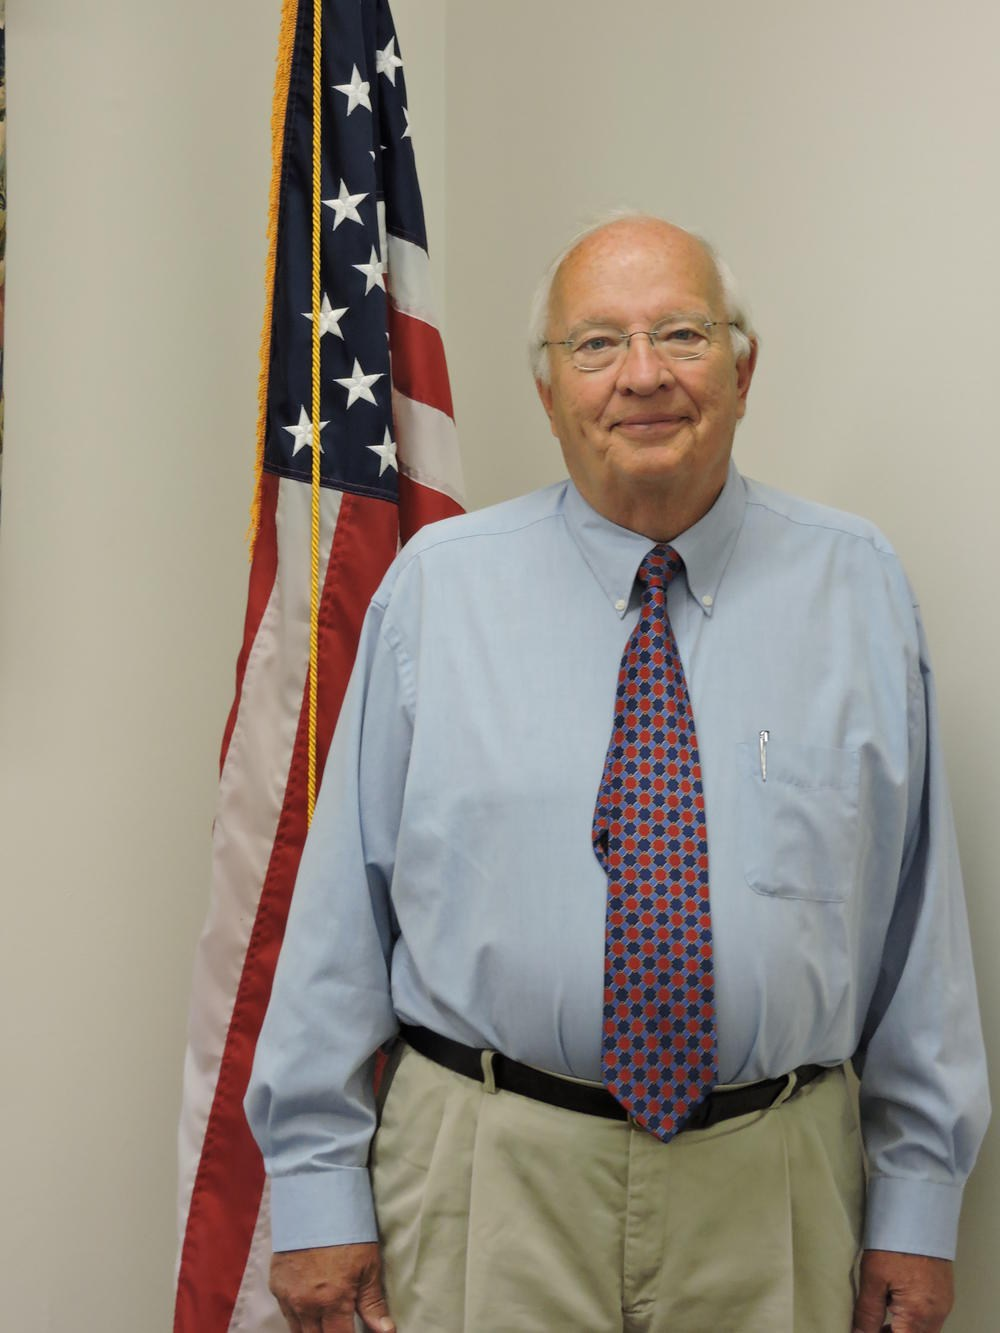 Dennis Peterson, School Board Secretary